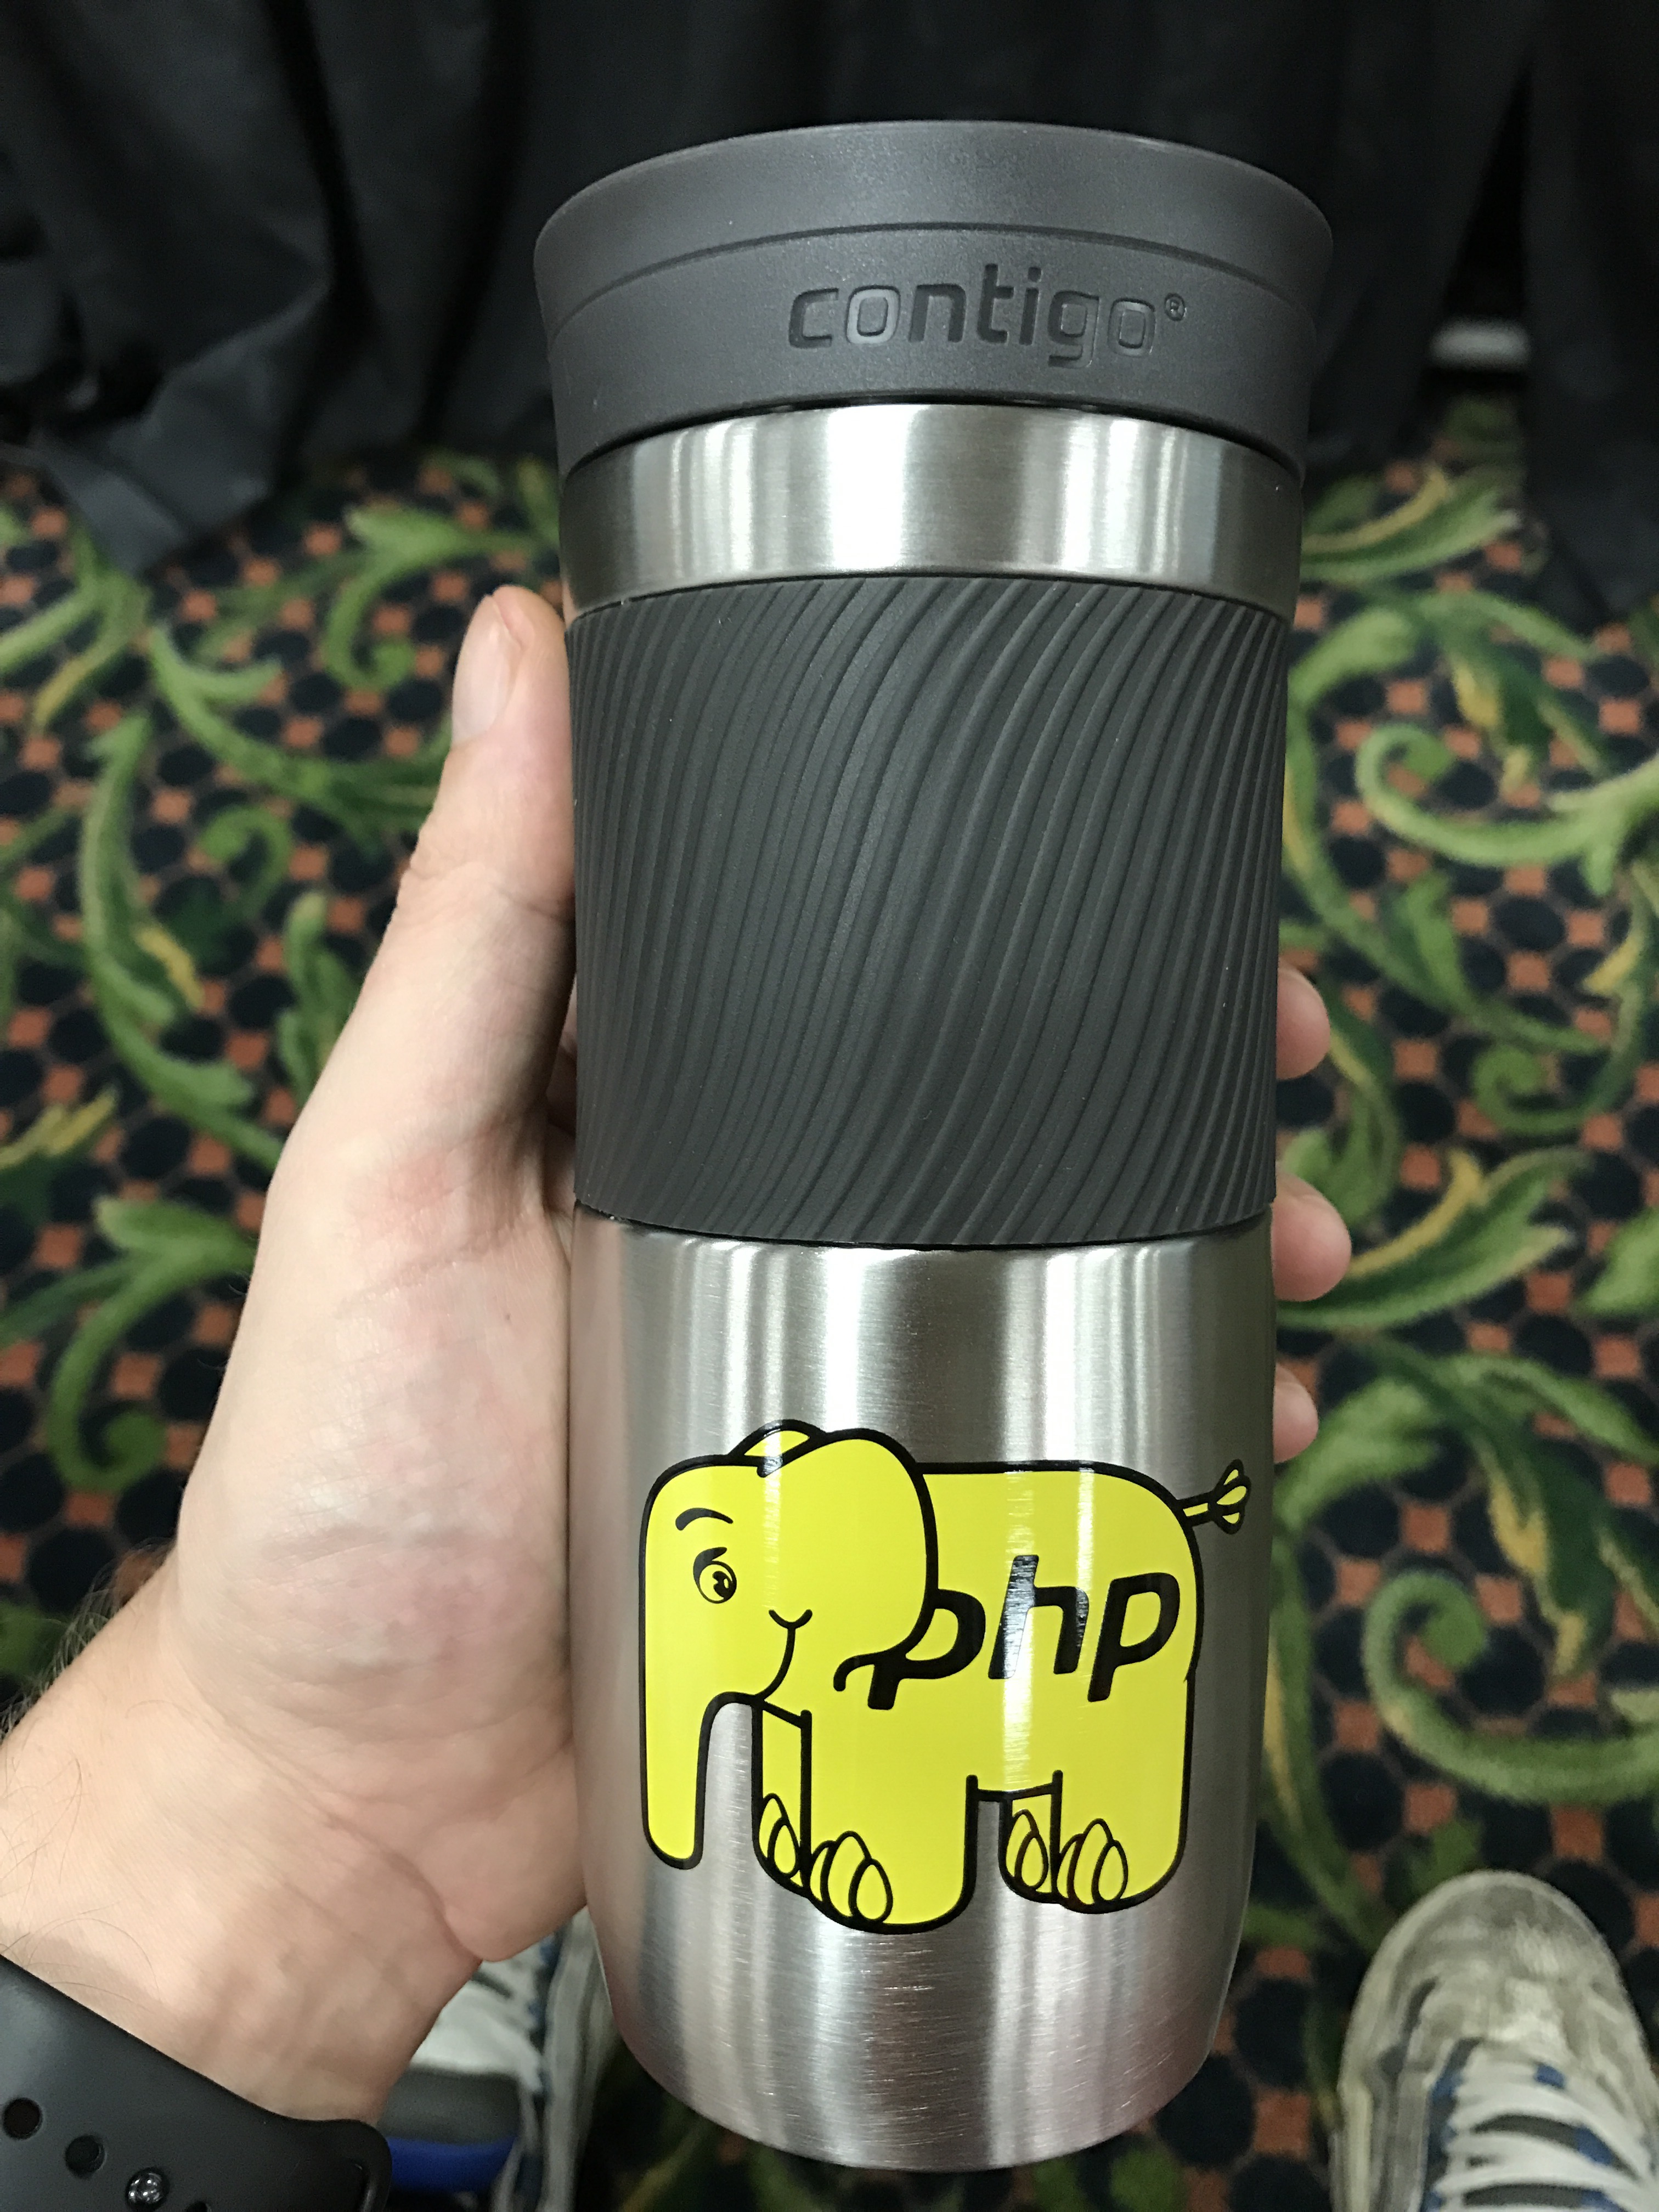 The Contigo thermal mug, elePHPant branded